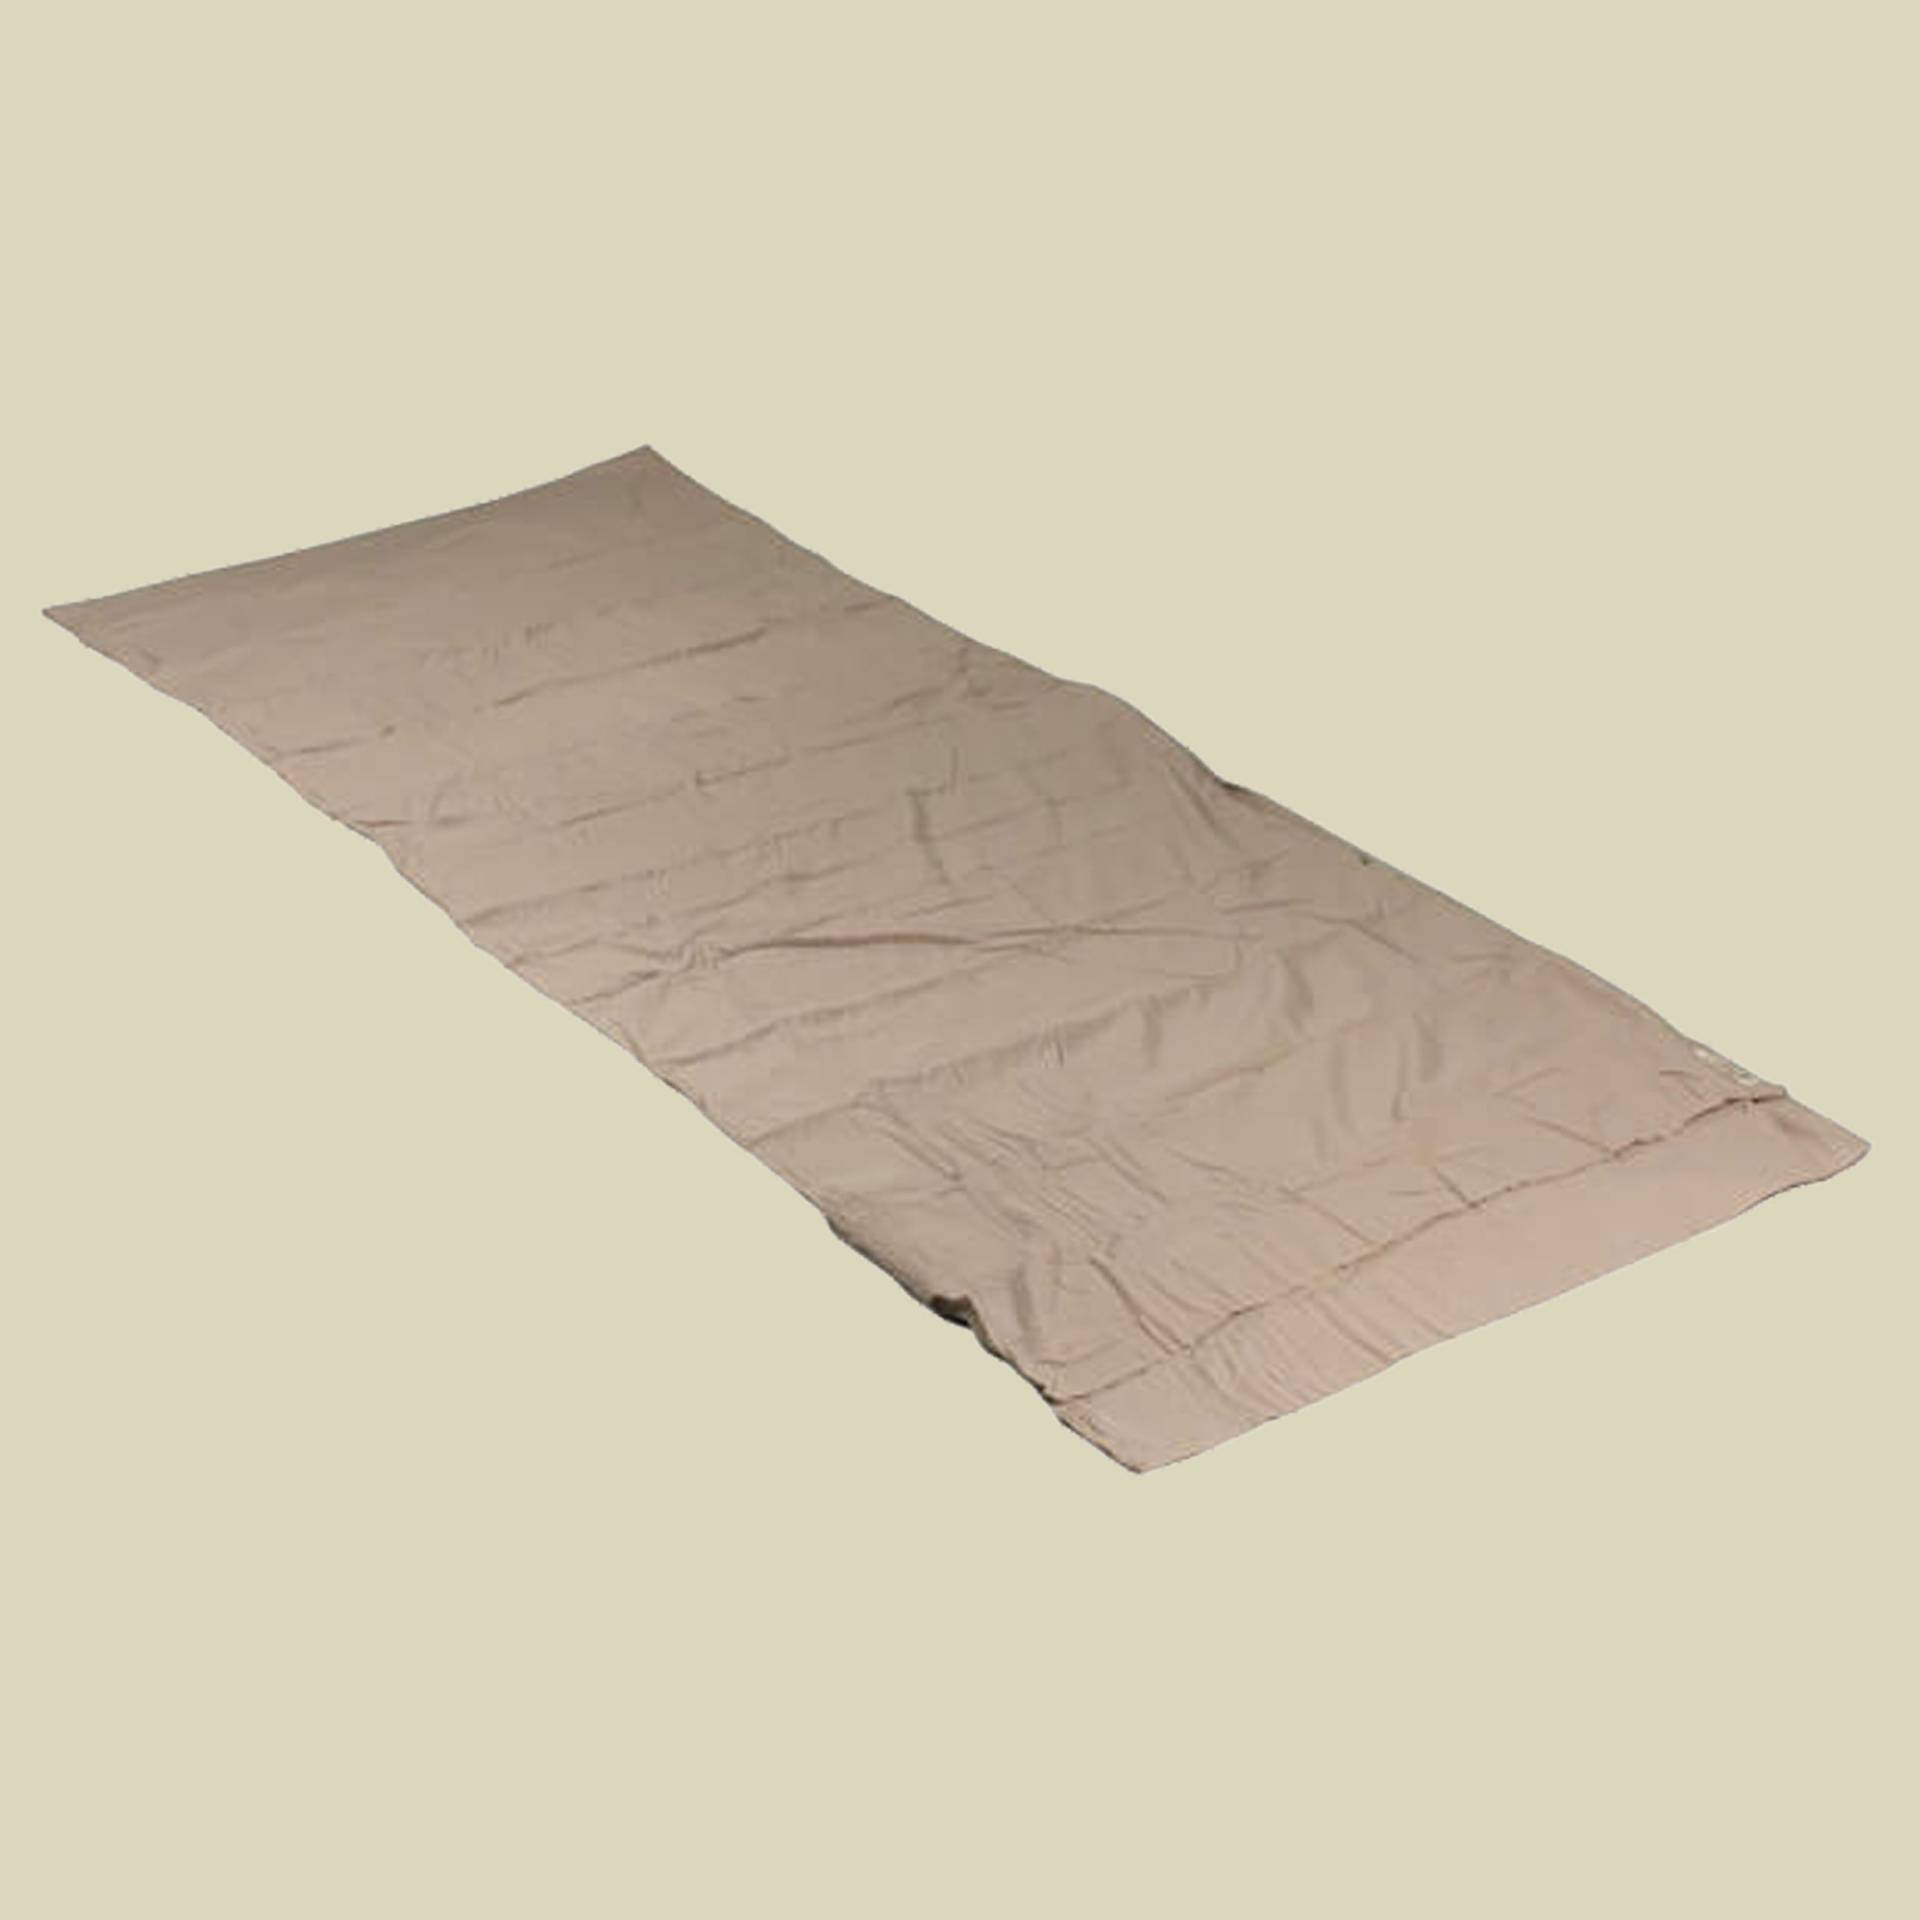 Insect Shield TravelSheet Egyptian Cotton Größe 210 x 82 cm Farbe sand von Cocoon